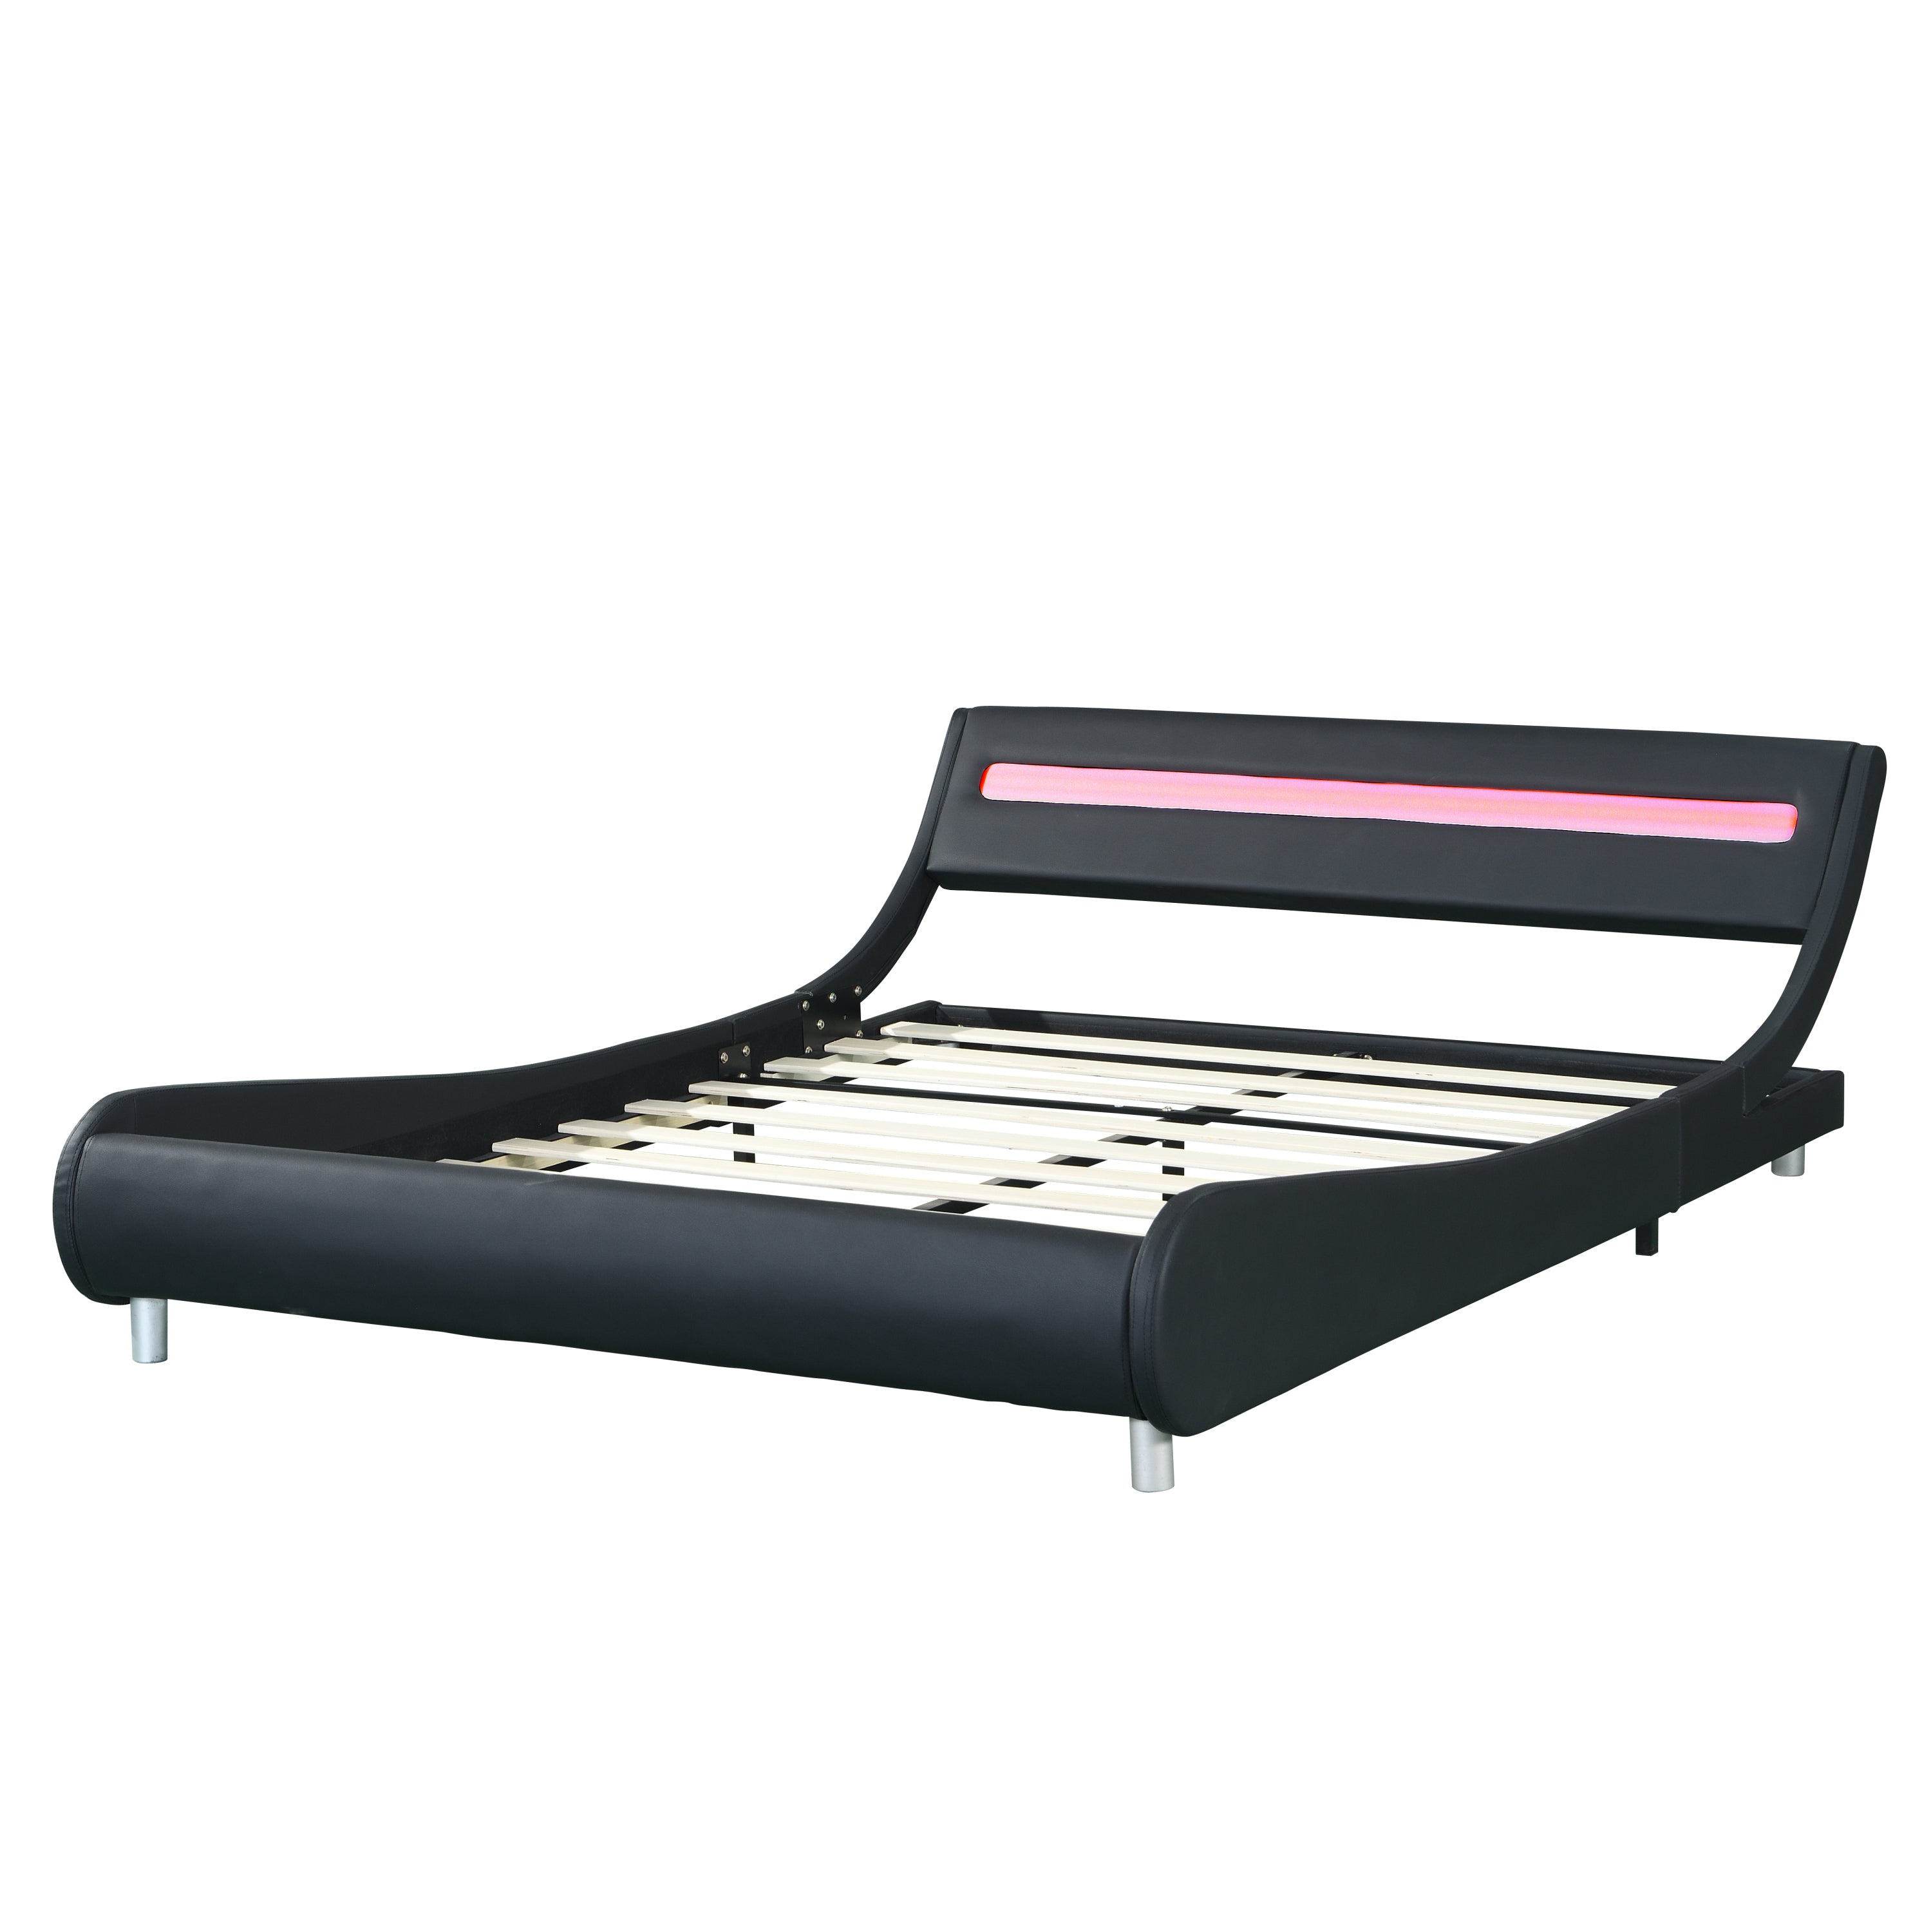 Faux Leather Upholstered Platform Bed Frame with Led Lighting Queen Size (Black)